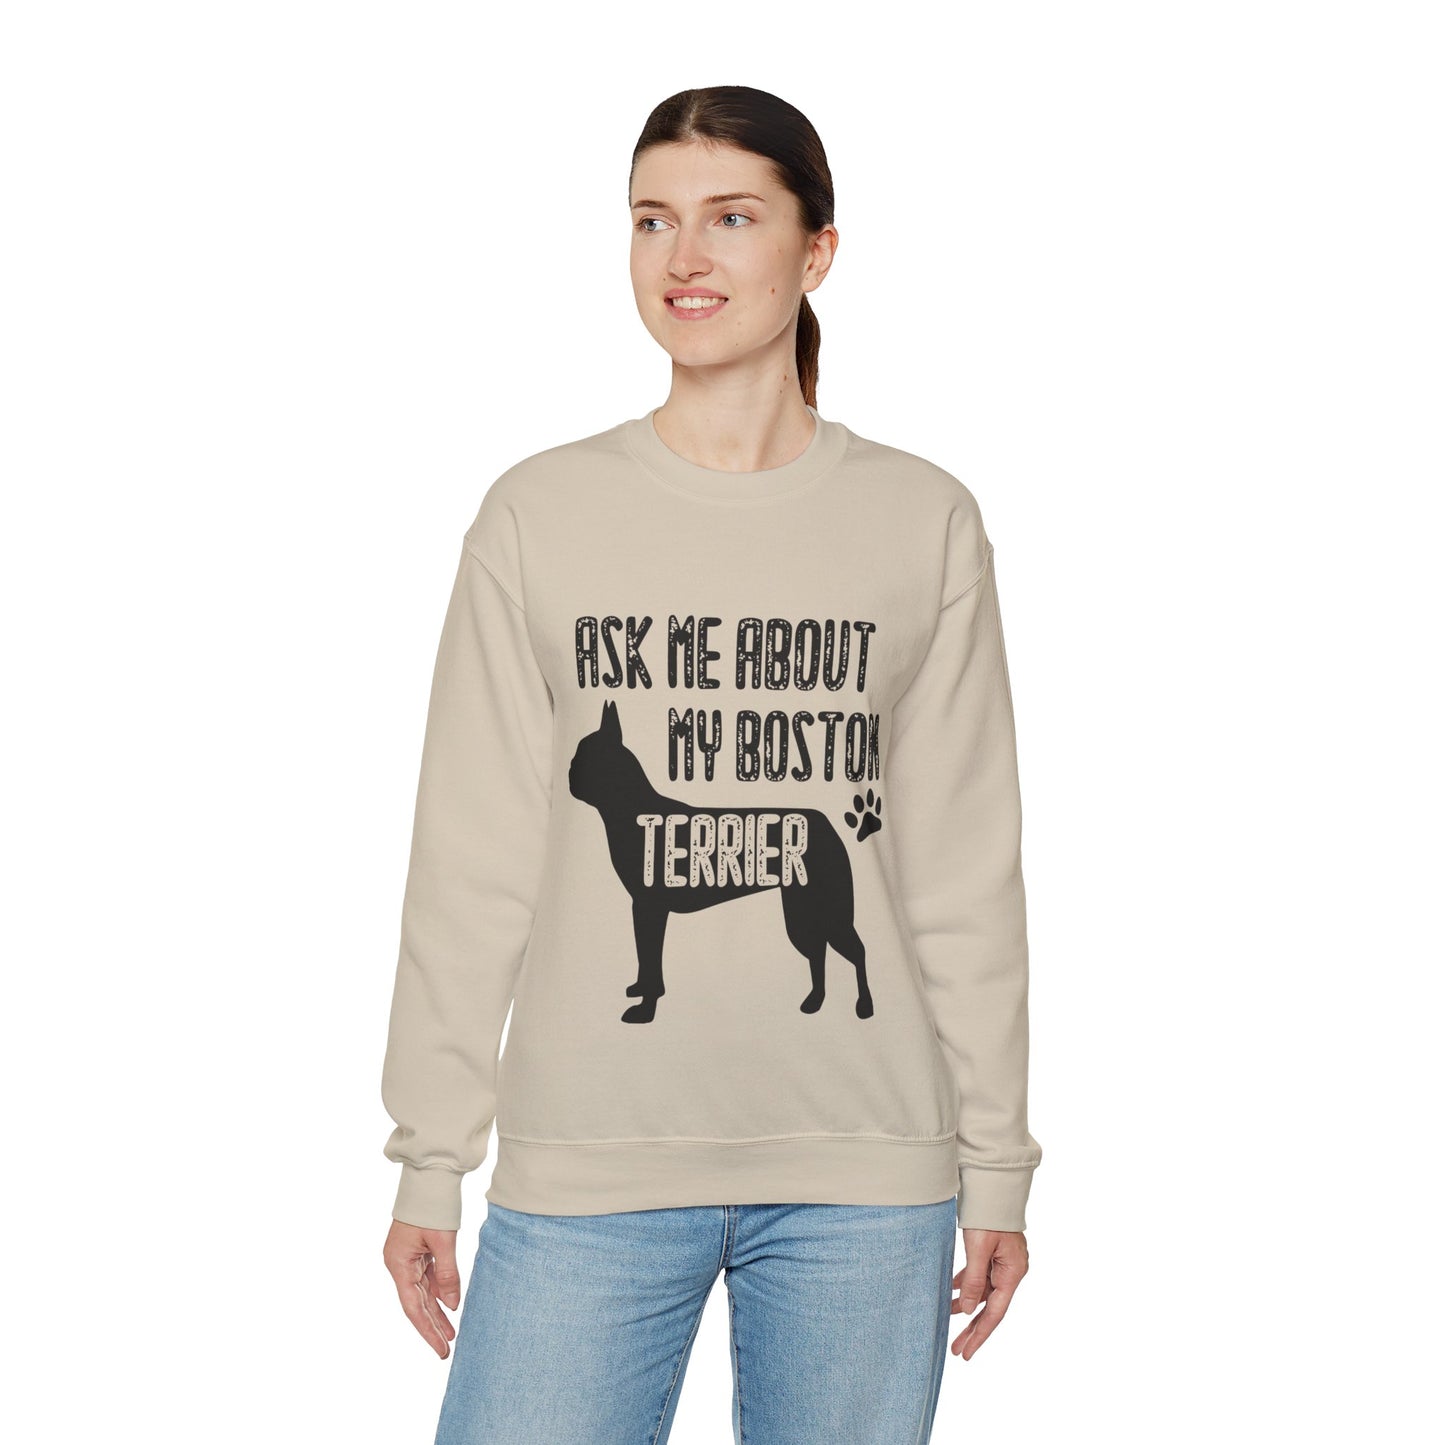 Maisie - Unisex Sweatshirt for Boston Terrier lovers